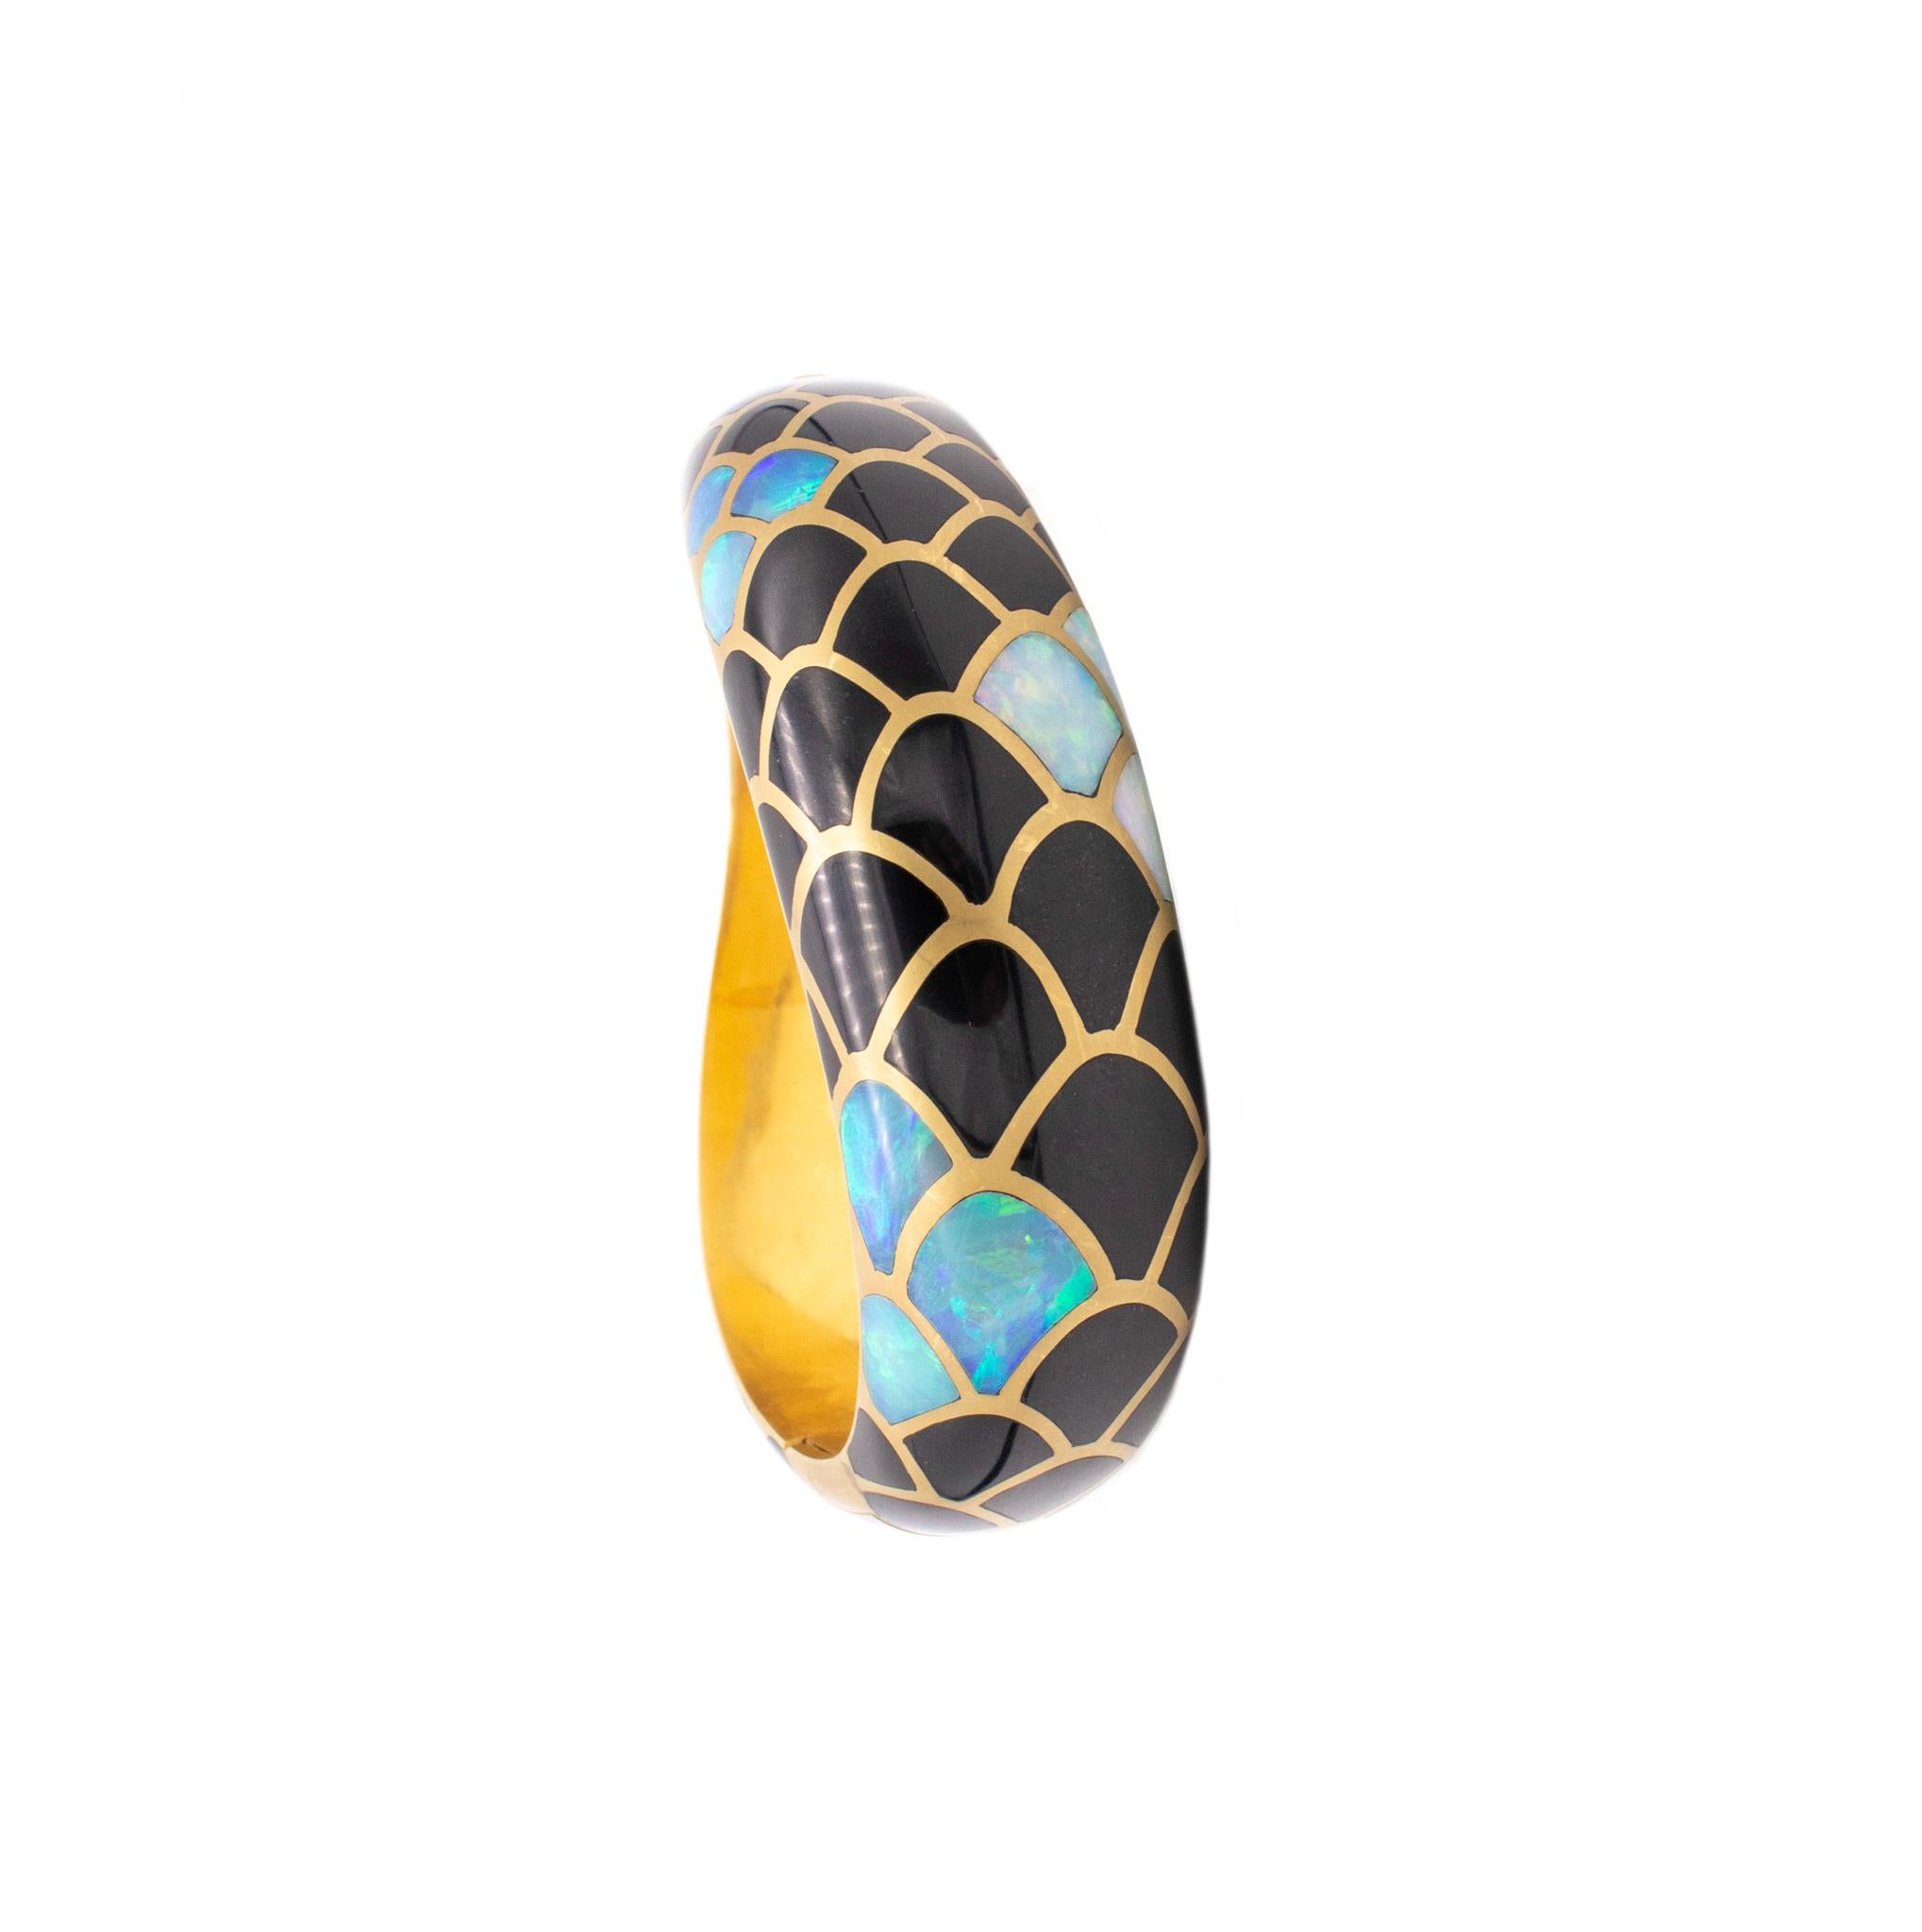 Modernist Angela Cummings Bangle Bracelet 18Kt Yellow Gold with Inlaid Opals & Black Jade